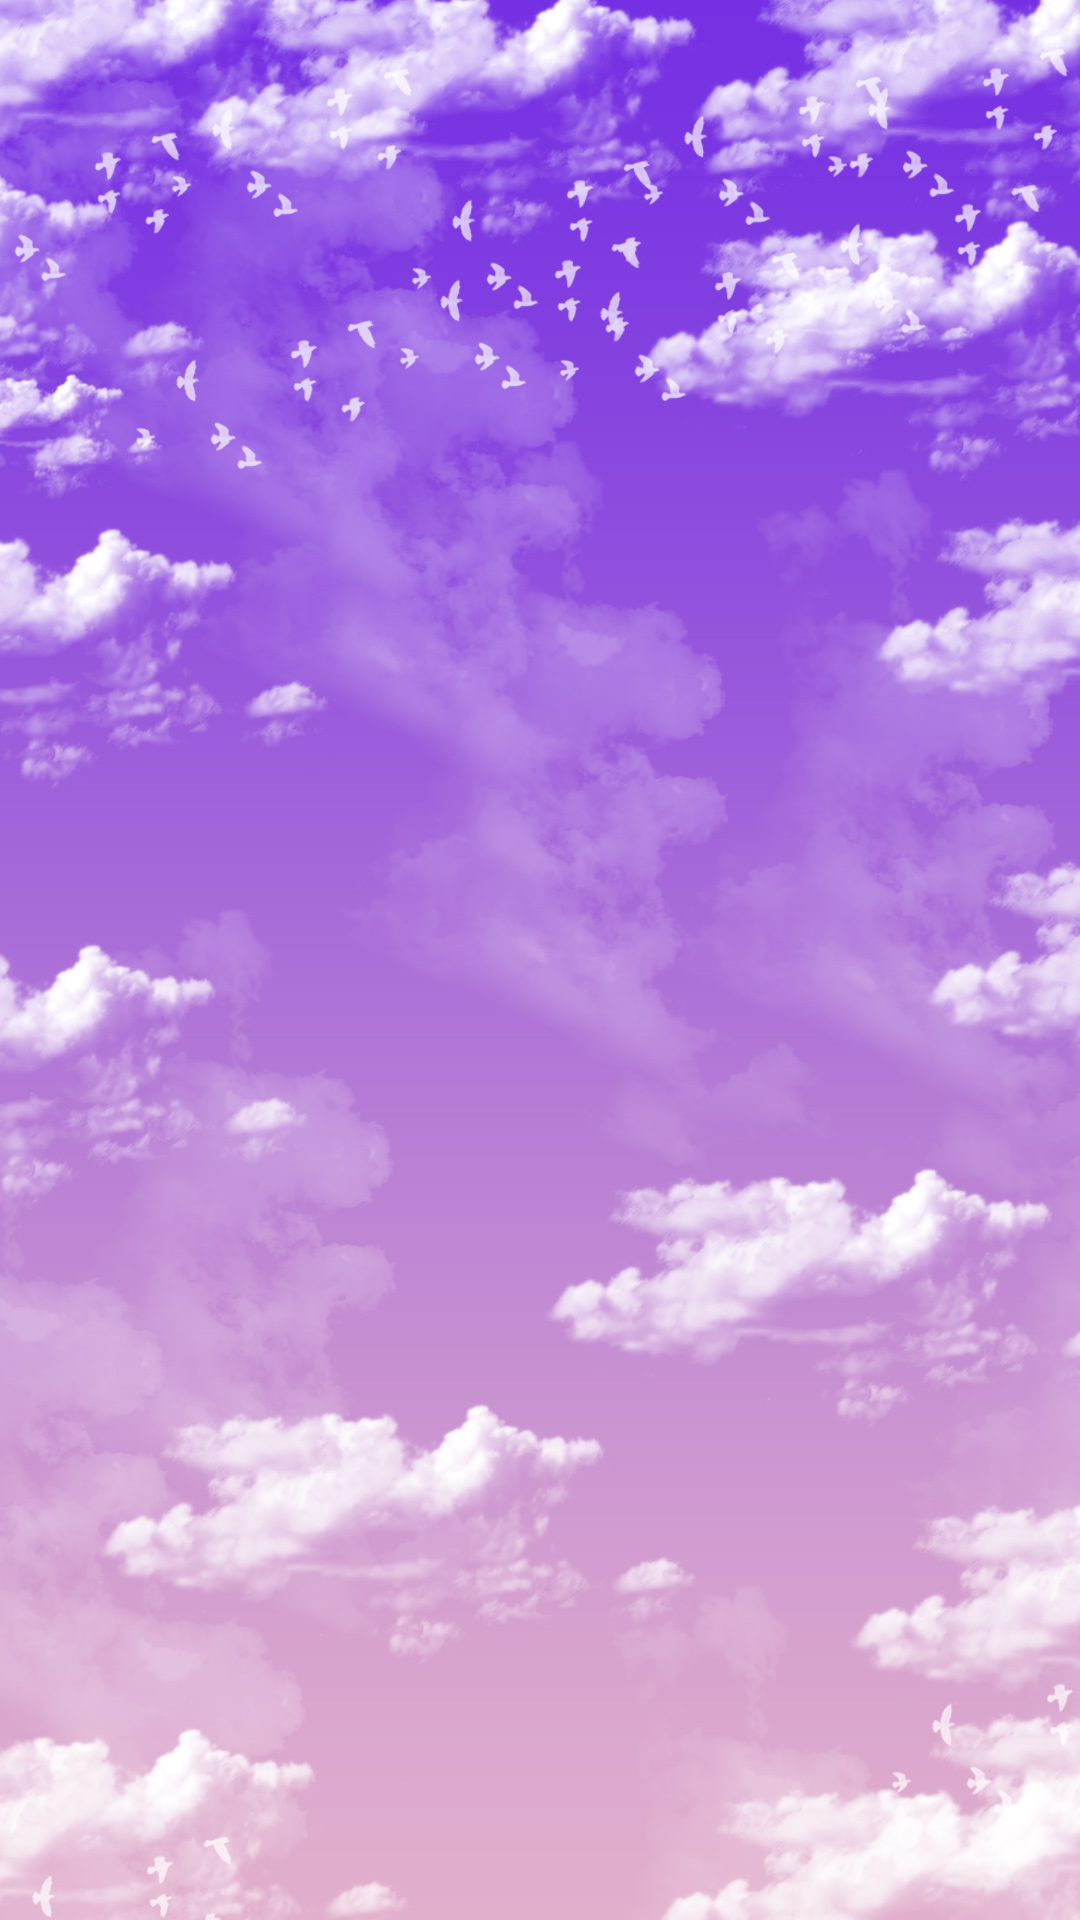 purple backgrounds tumblr